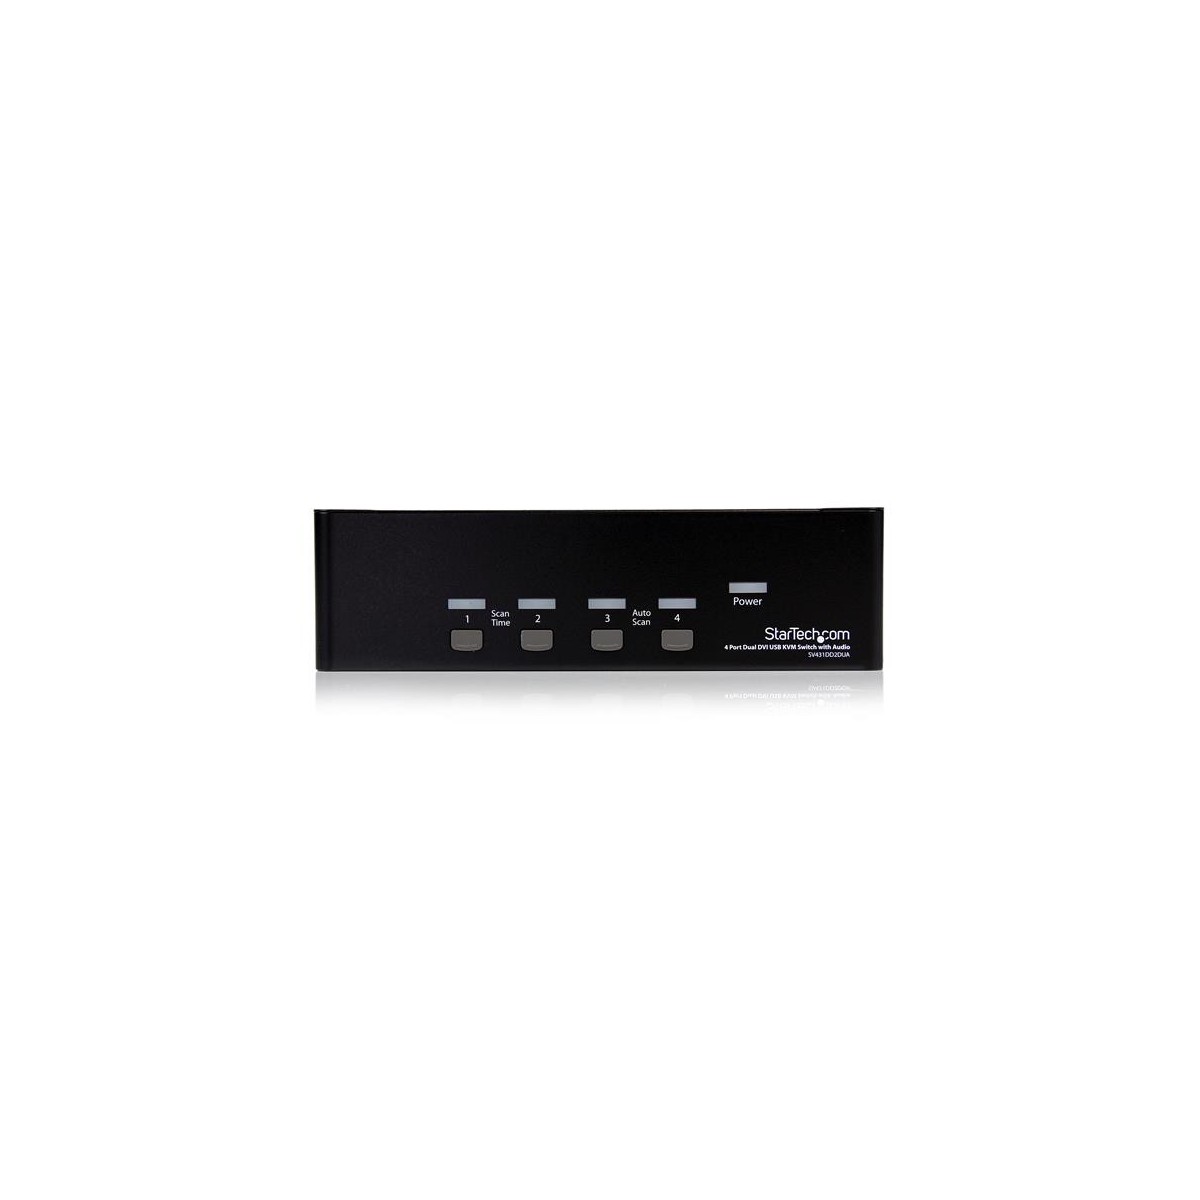 StarTech.com 4 Port Dual DVI USB KVM Switch with Audio  USB 2.0 Hub - 2048 x 1536 pixels - Black